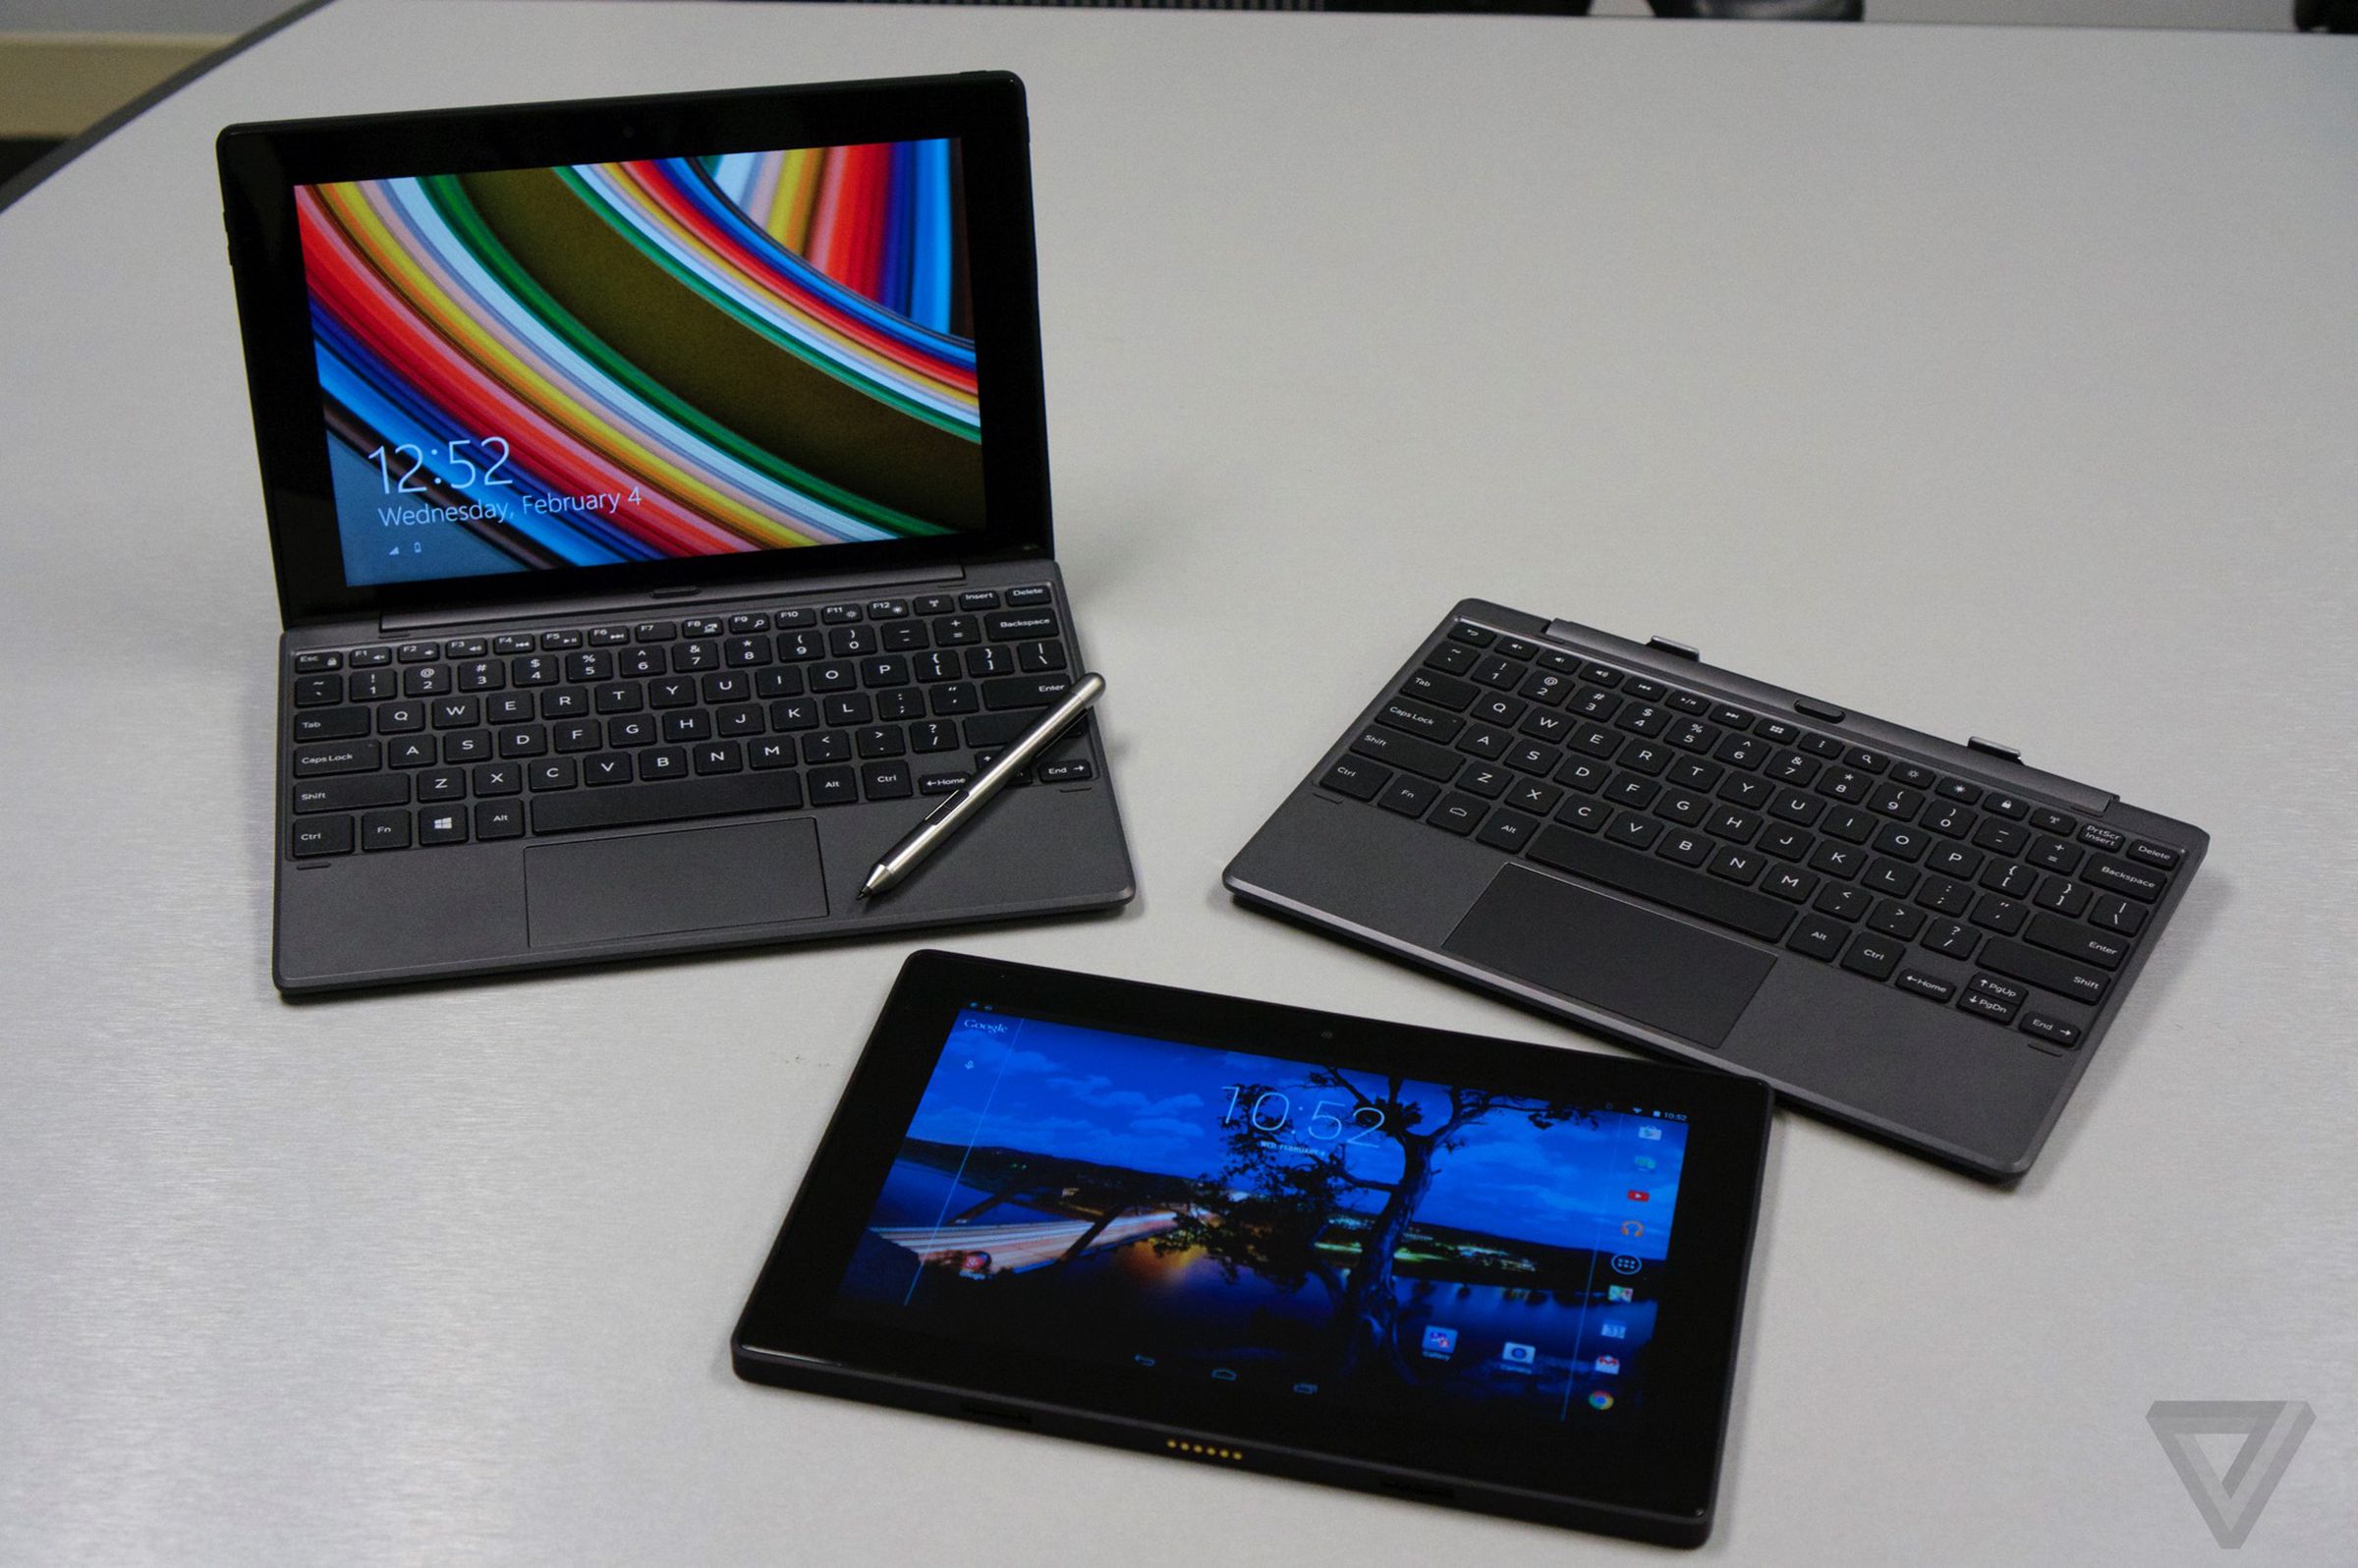 Dell Venue 10 and Venue 10 Pro tablets photos